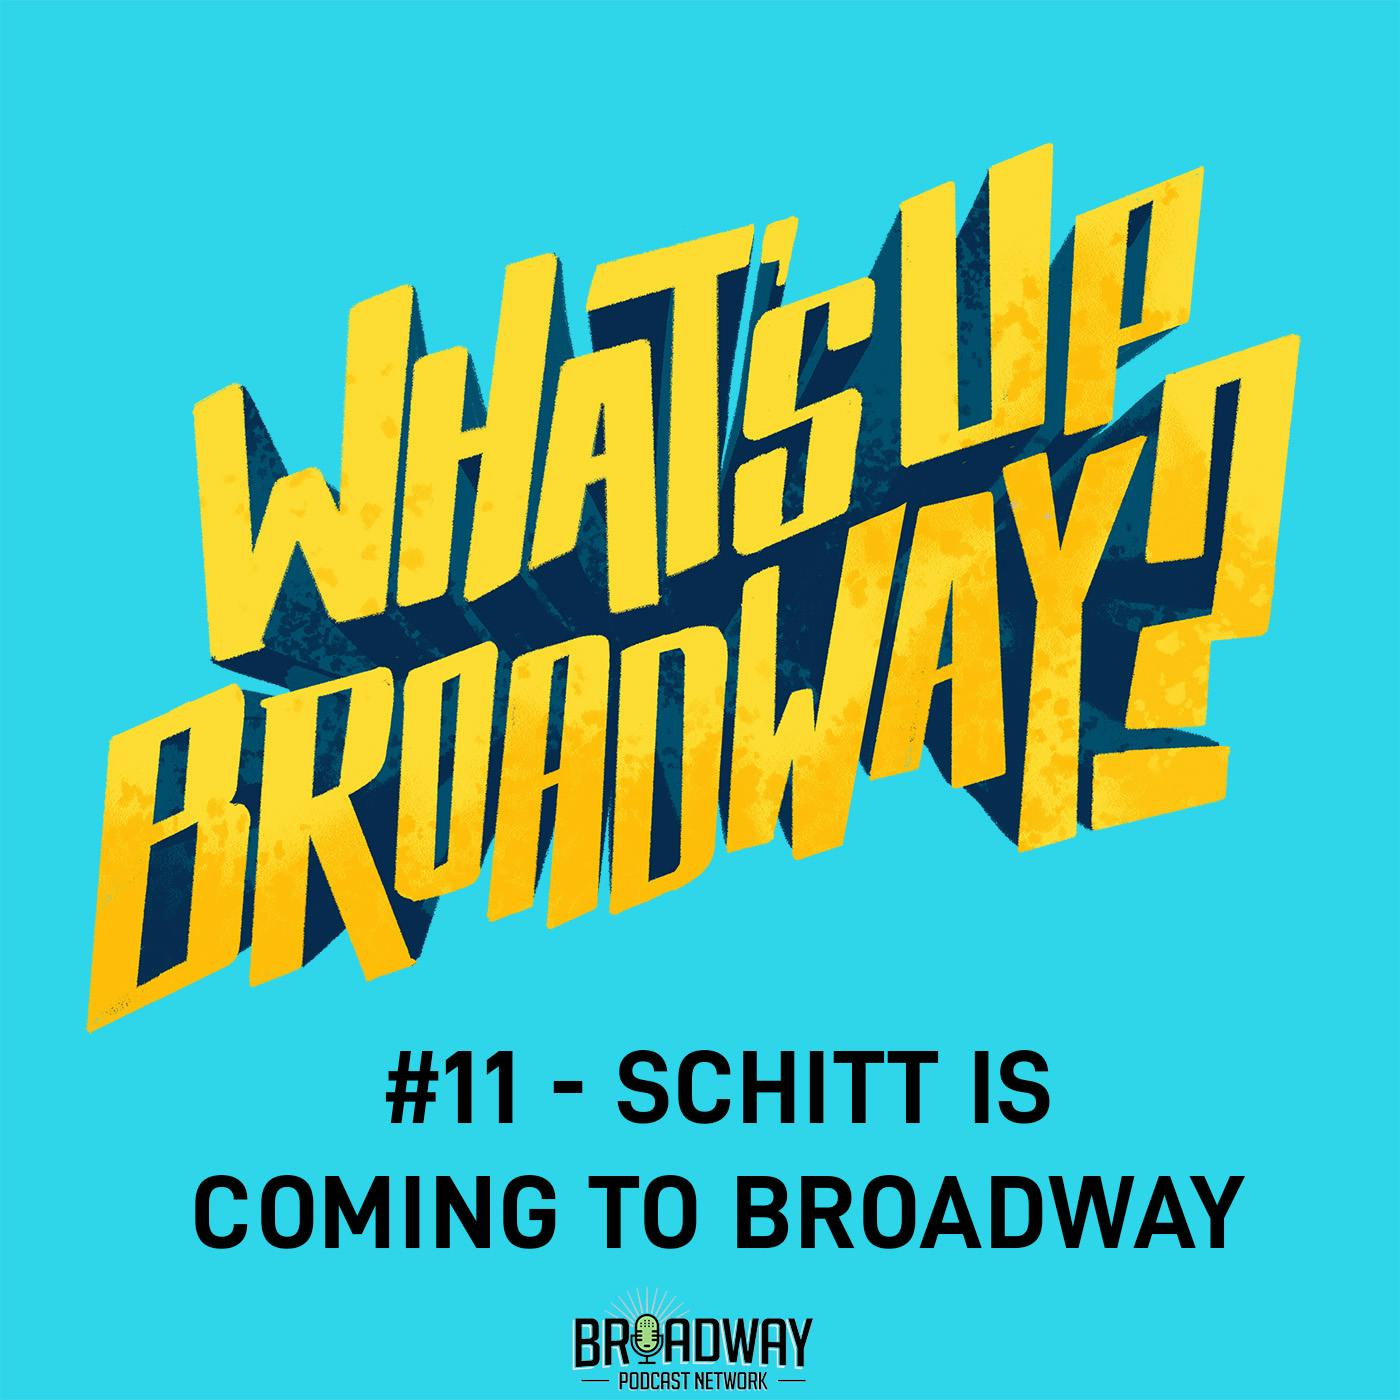 #11 - Schitt is coming to Broadway